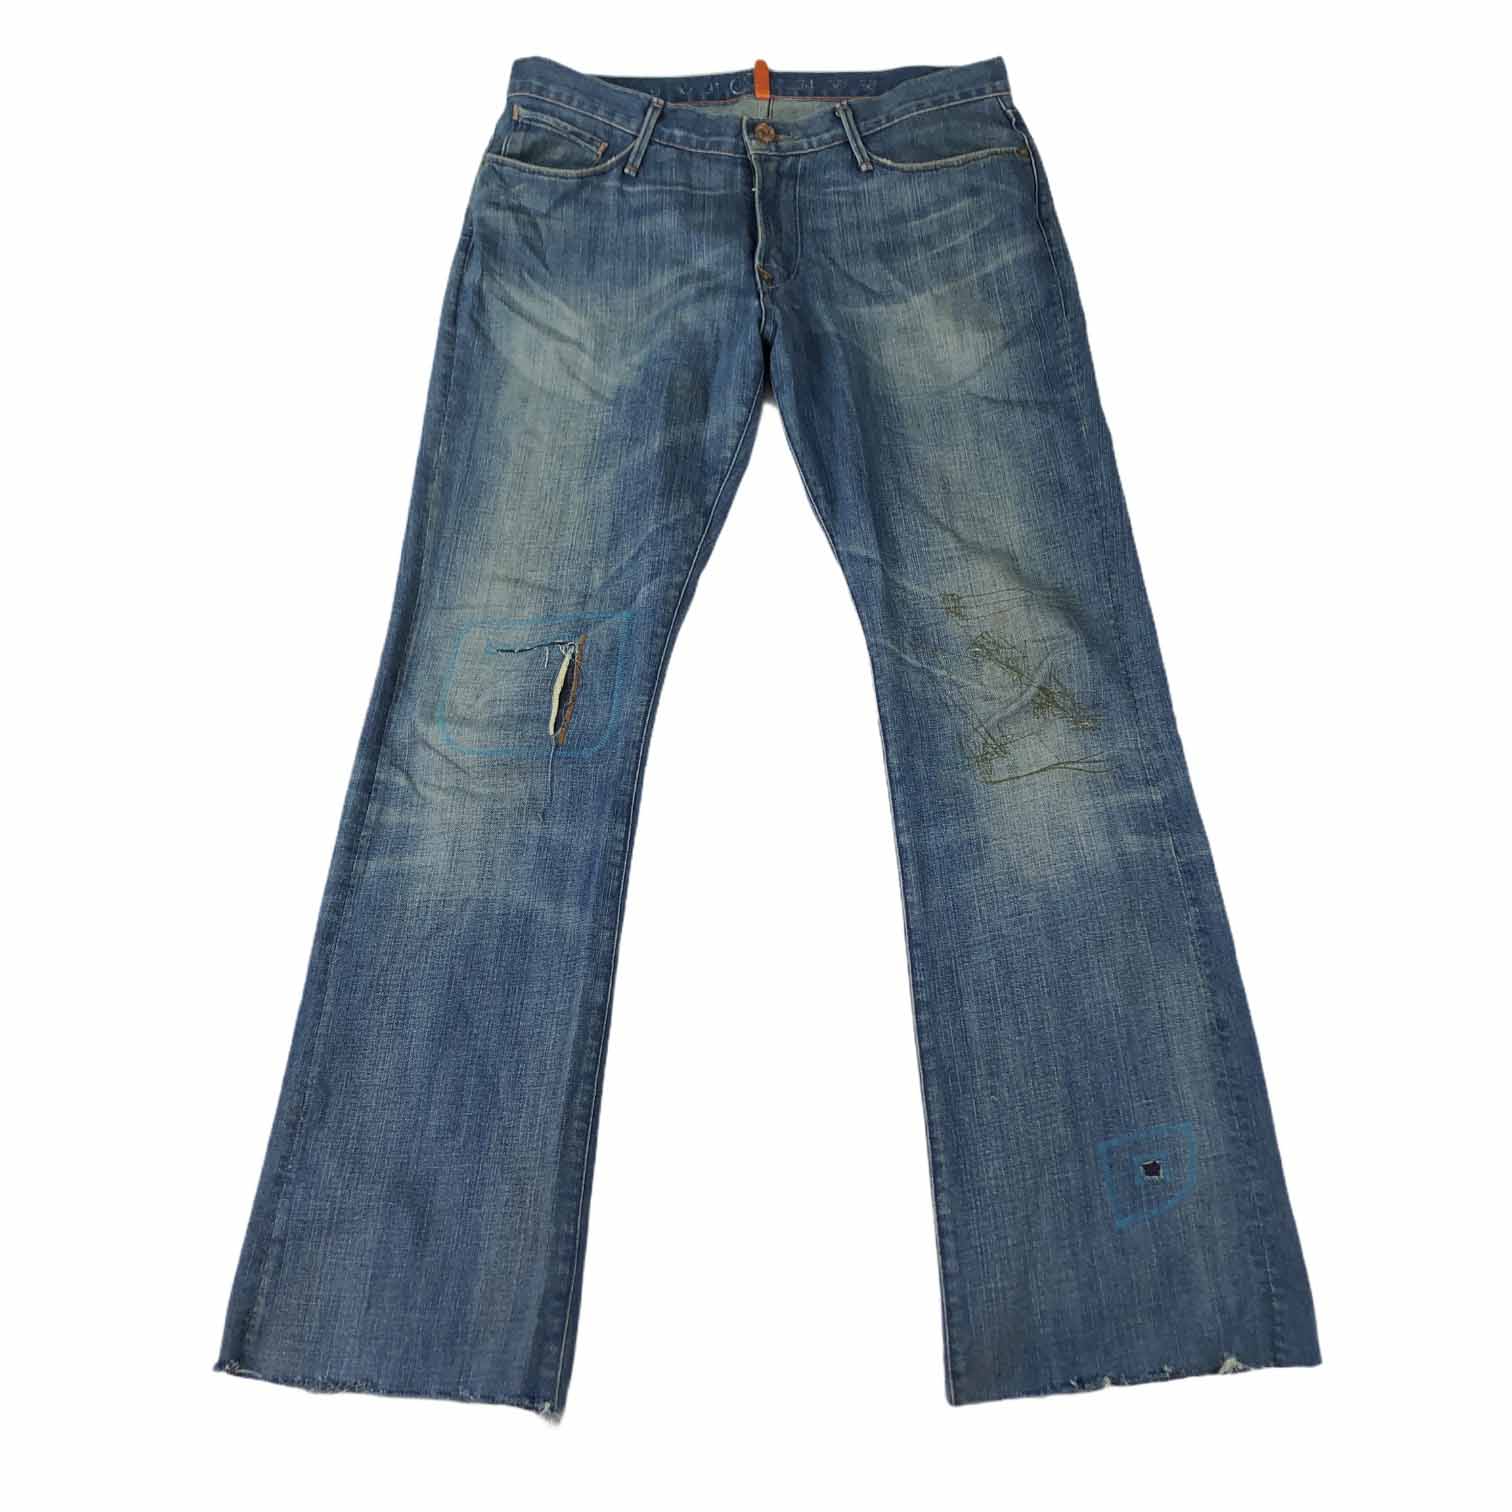 [Earnest Sewn] Bootscut Denim Pants - Size 32